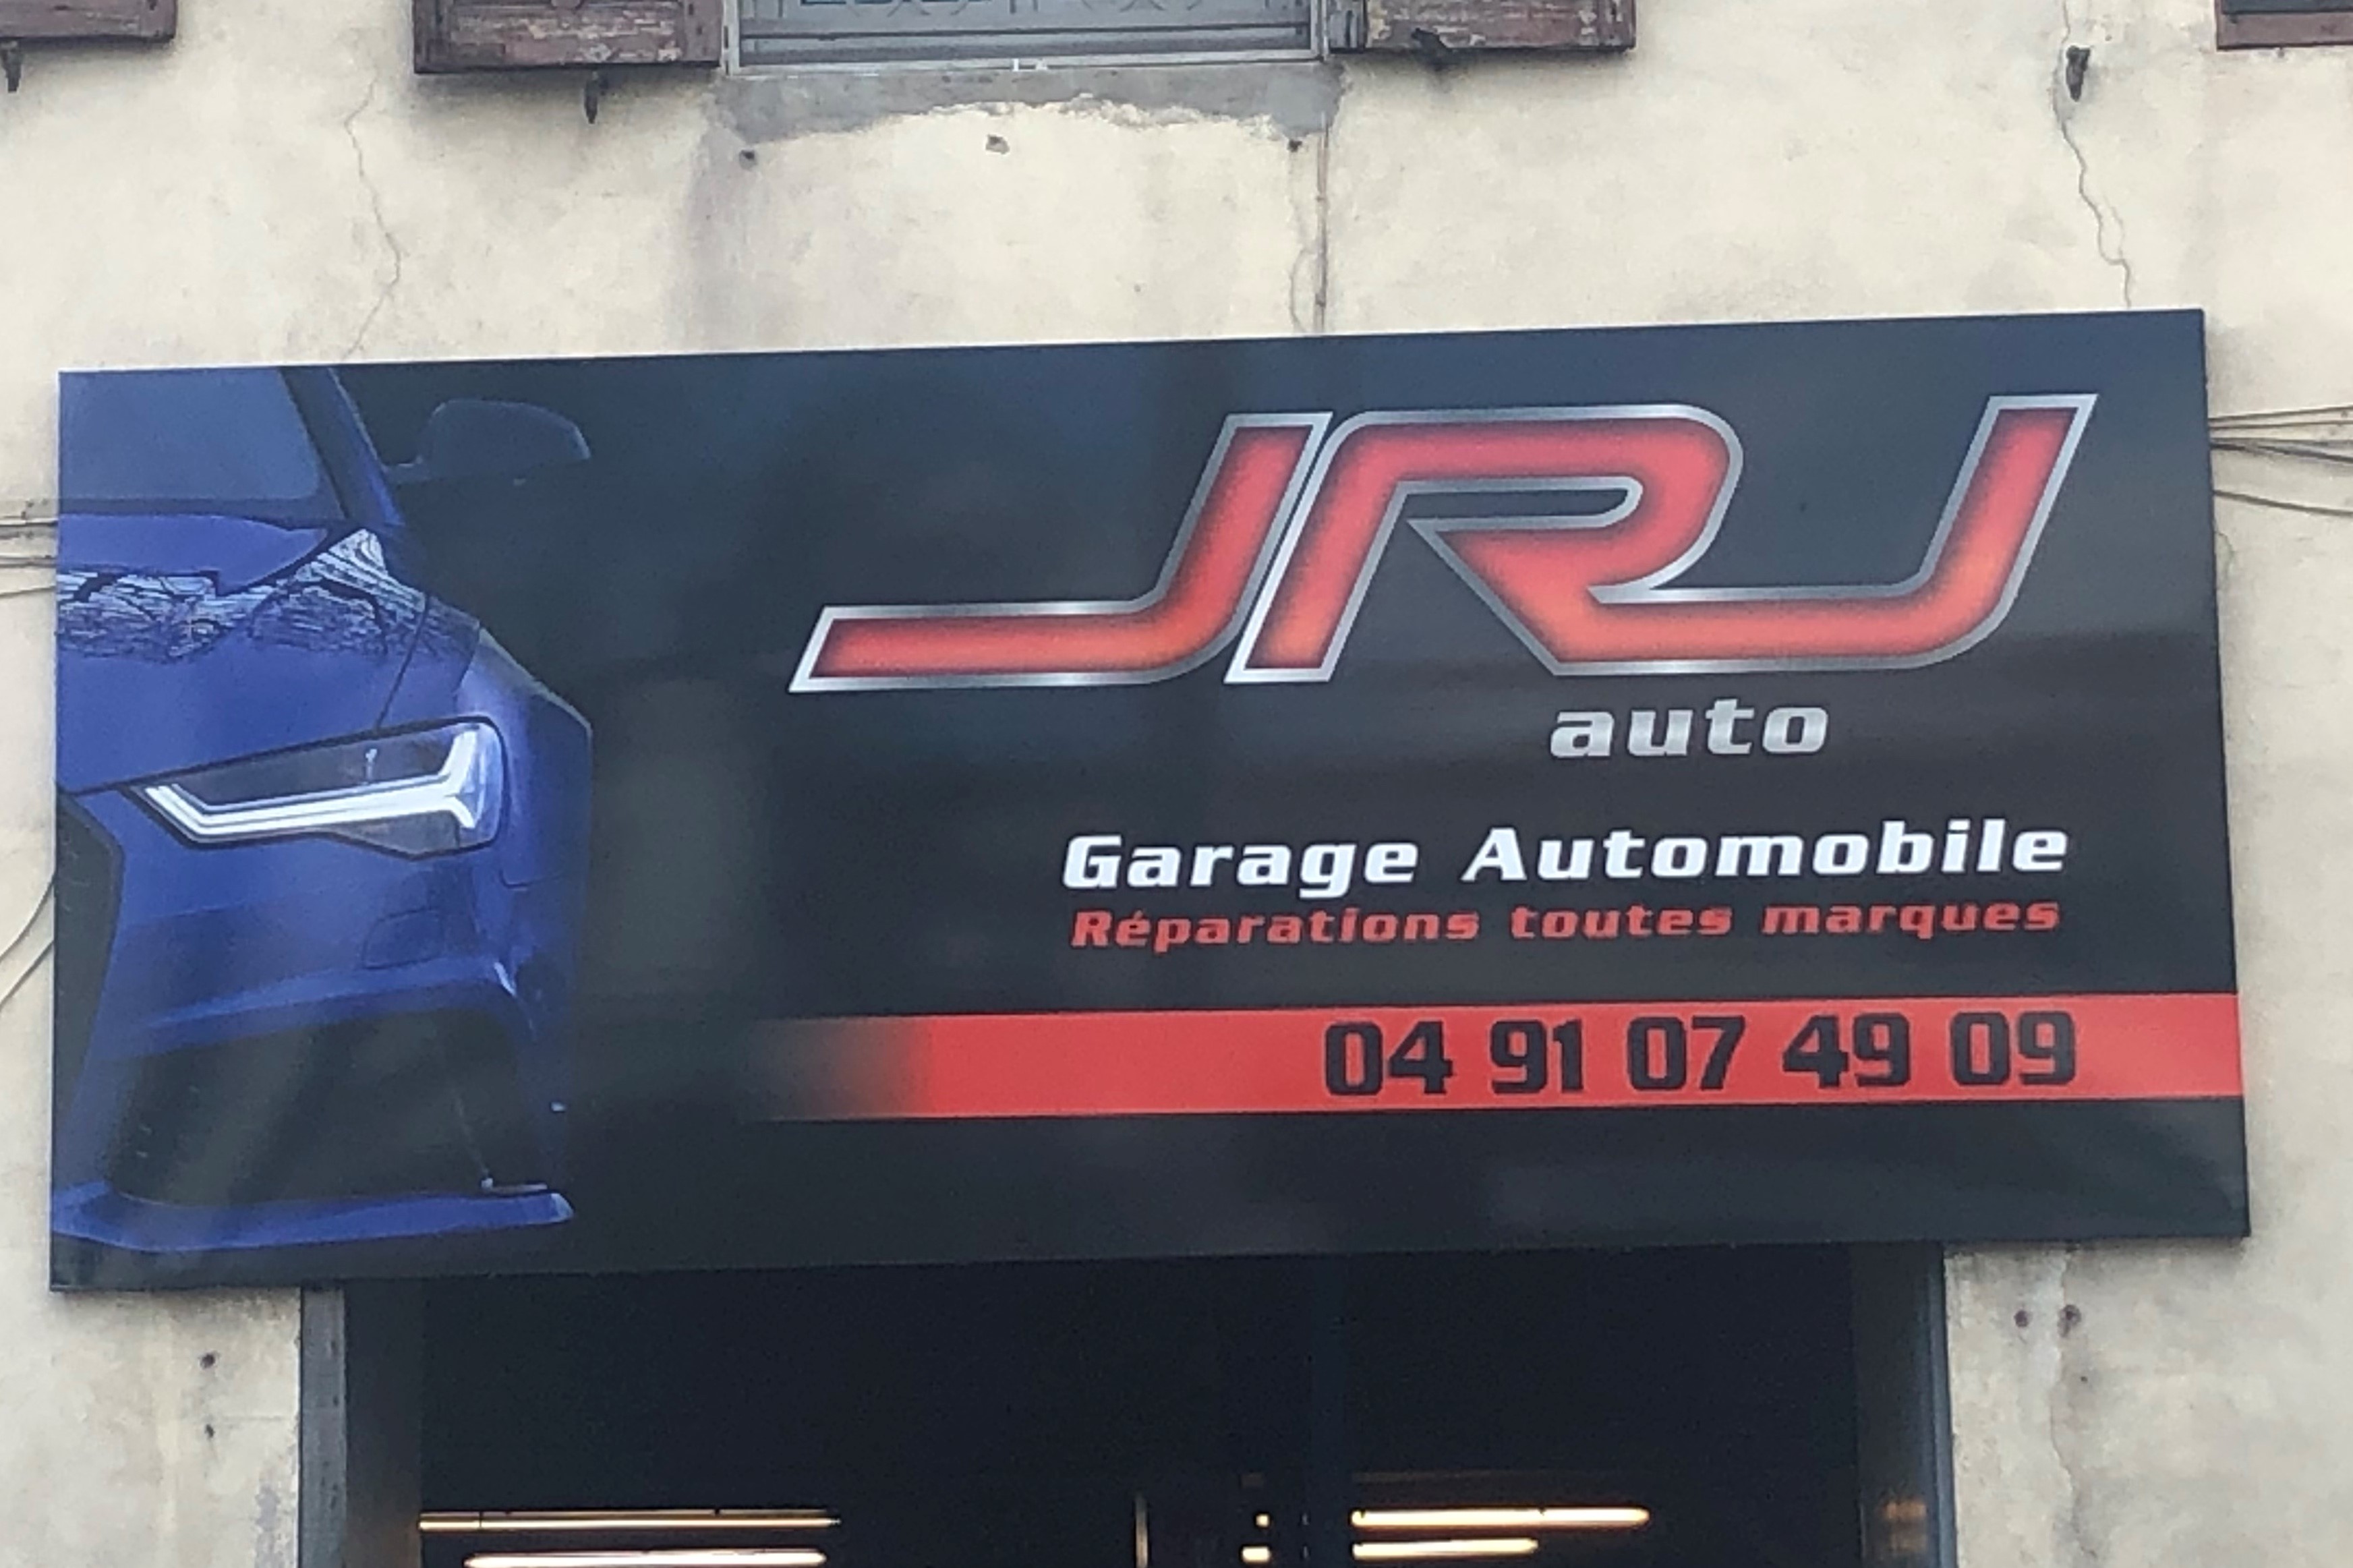 Garage JRJ Auto logo